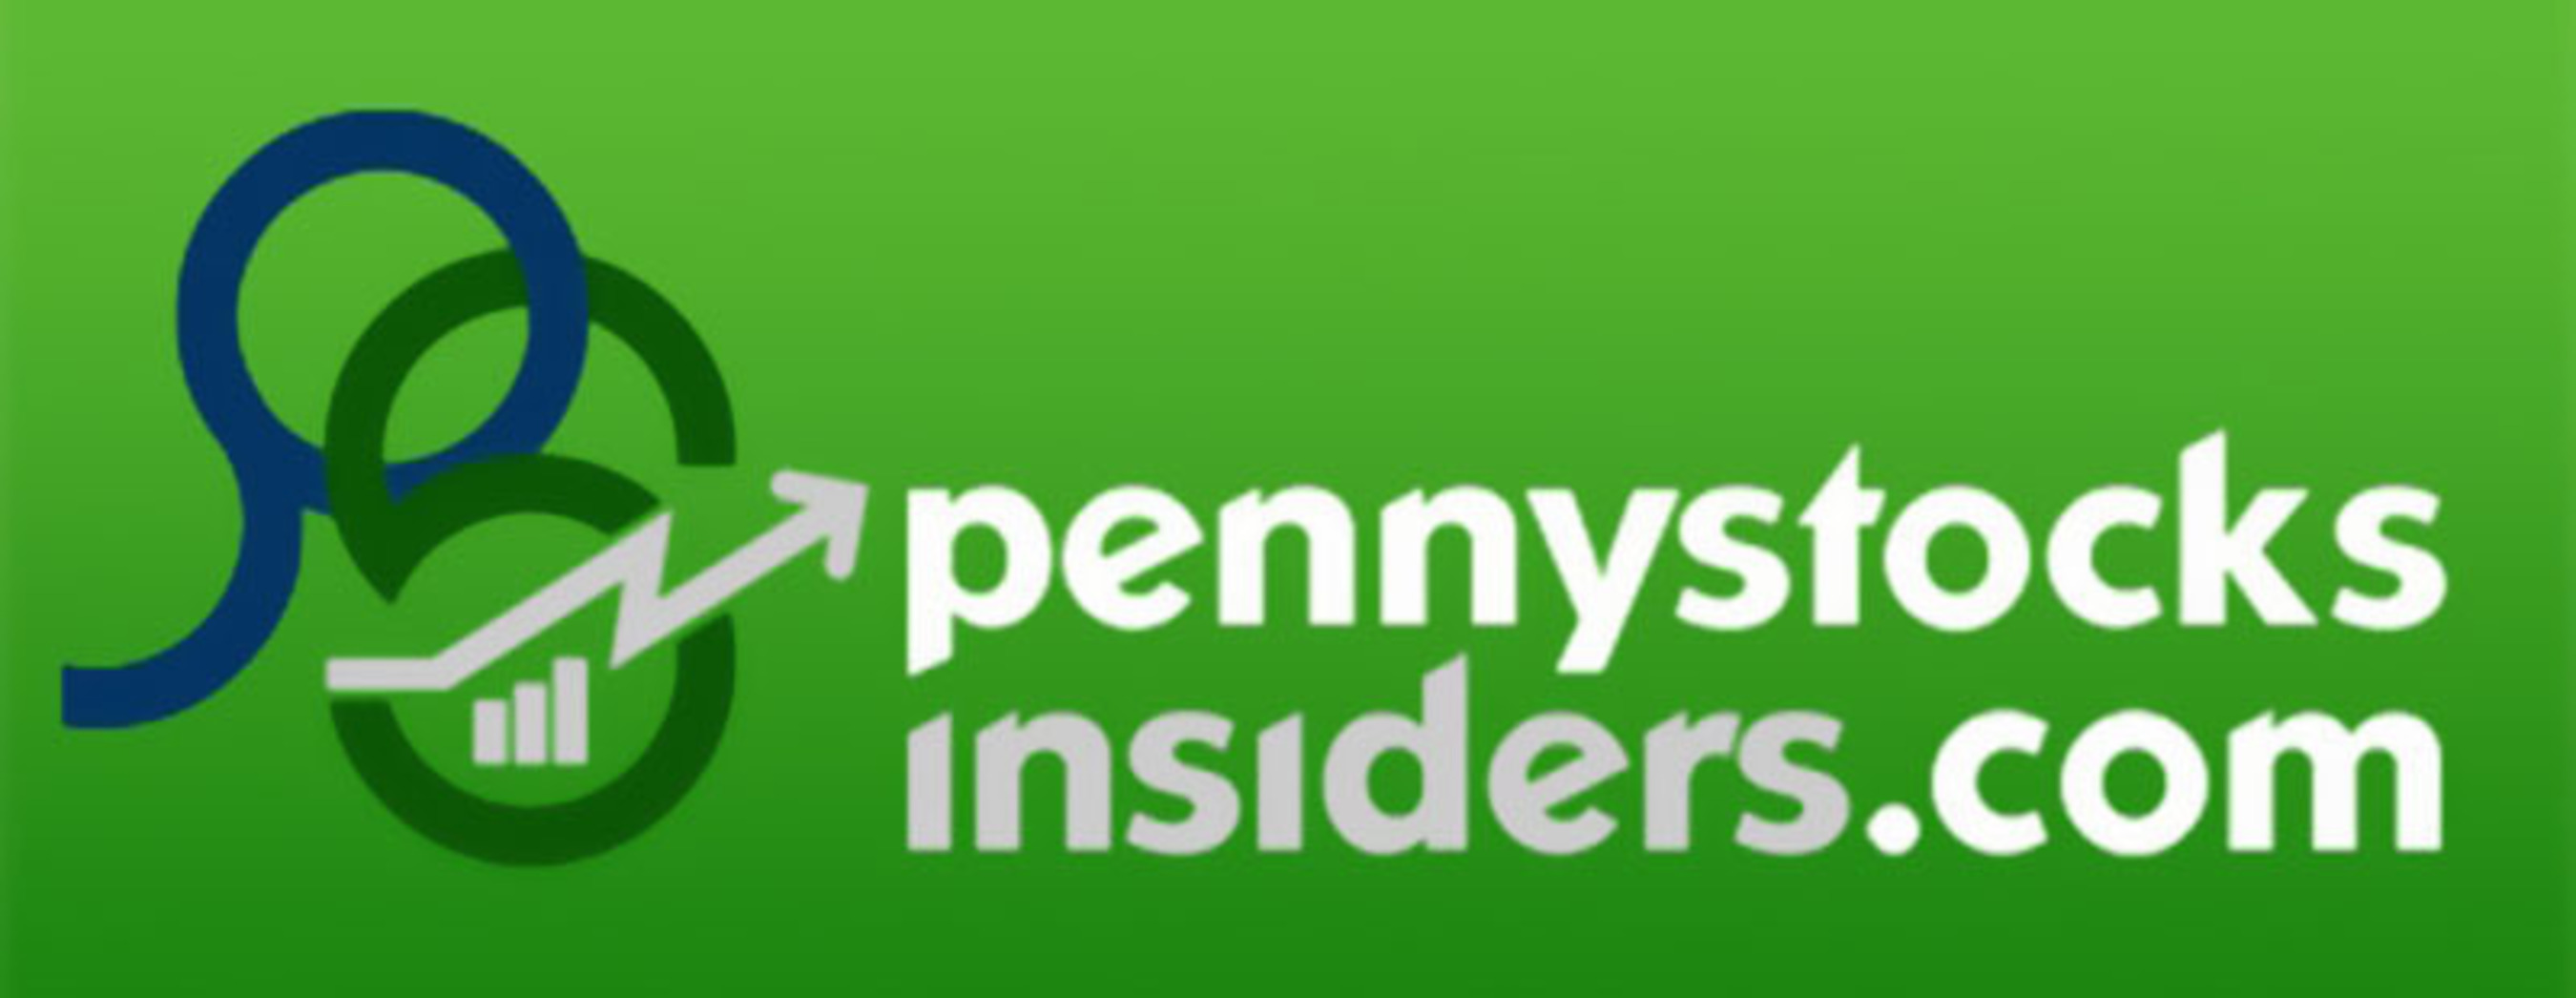 Pennystocks Insiders Logo